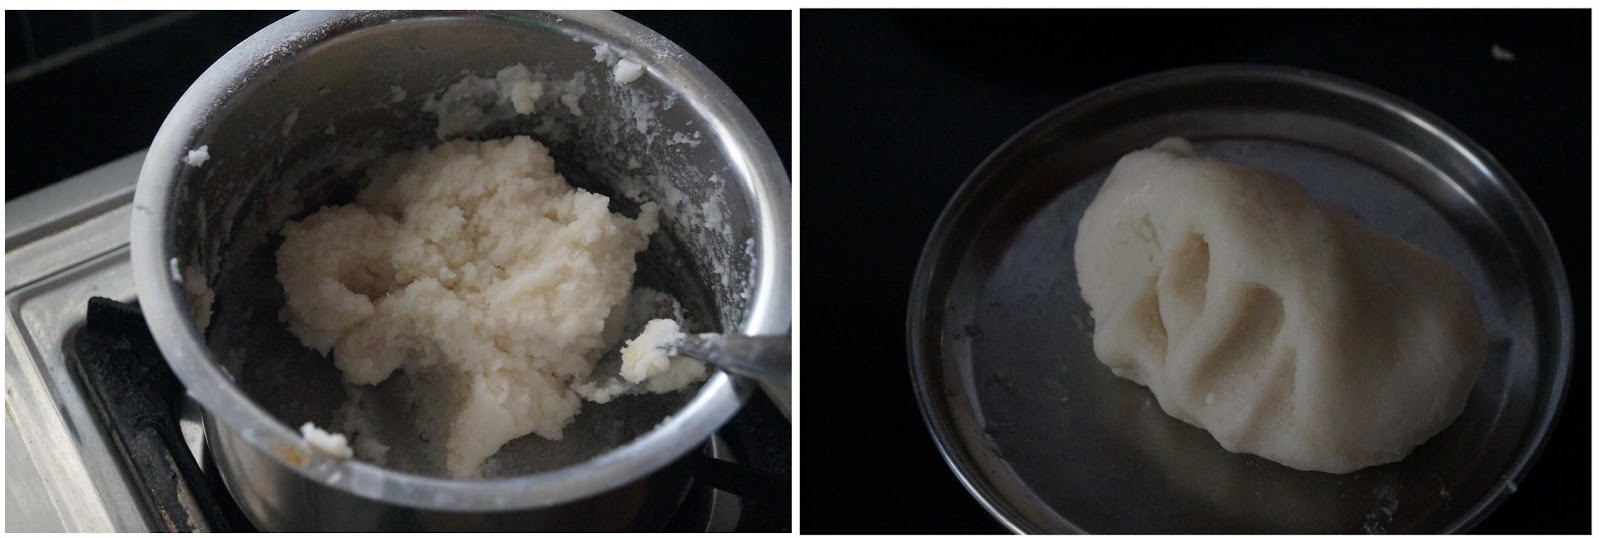 making the rice flour dough to make undralla payasam